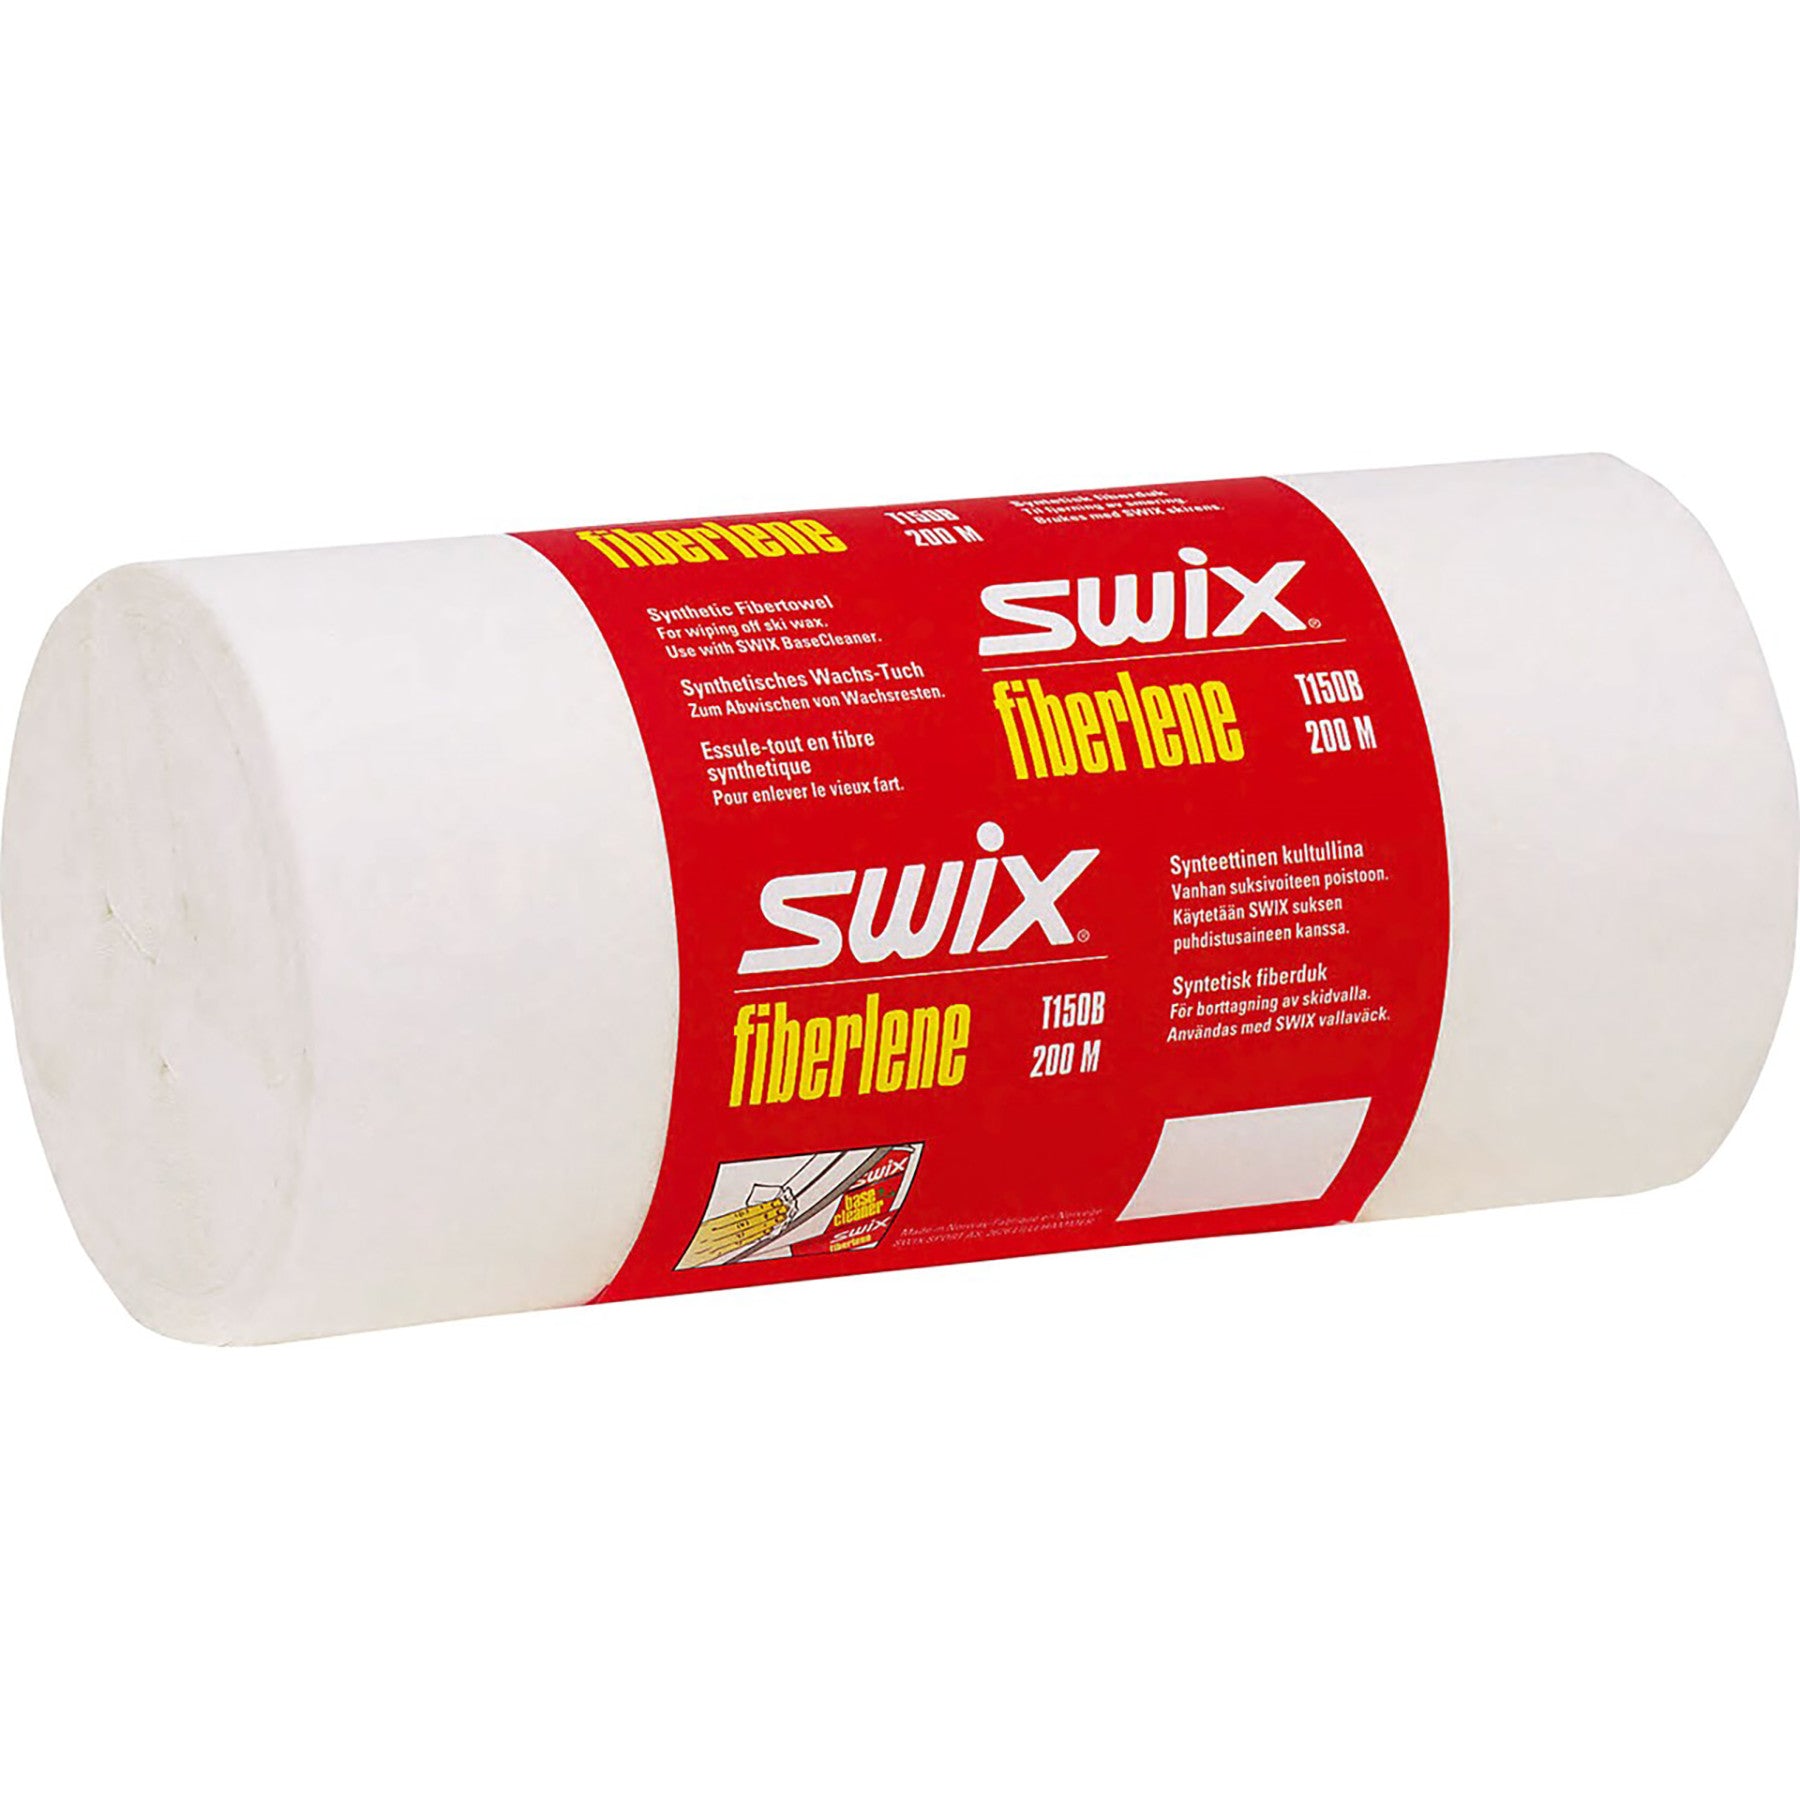 Swix Fiberlene XL 200m Roll